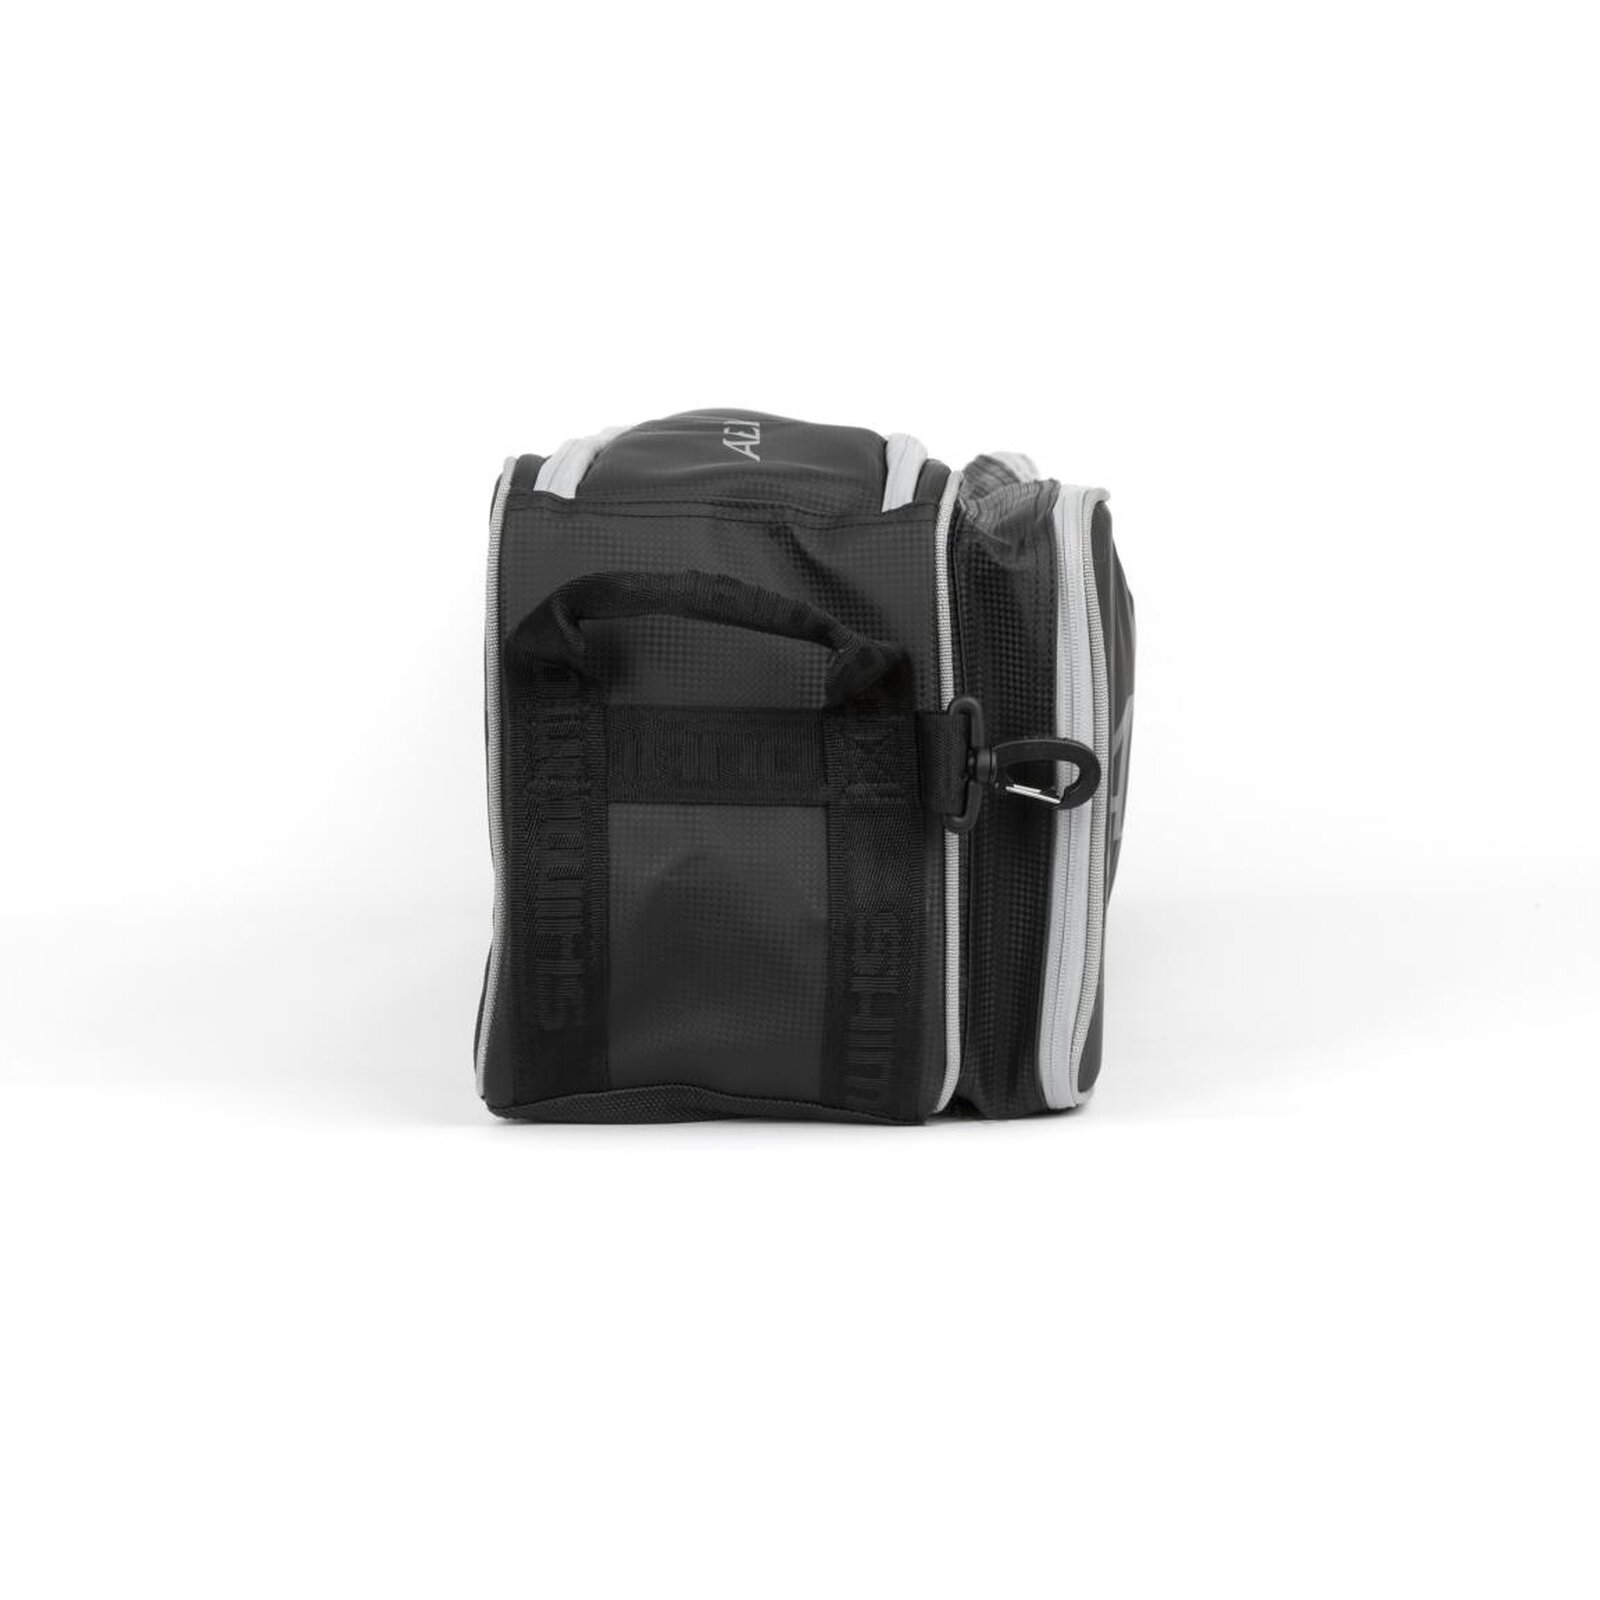 Shimano Aero Sync Roller Bag